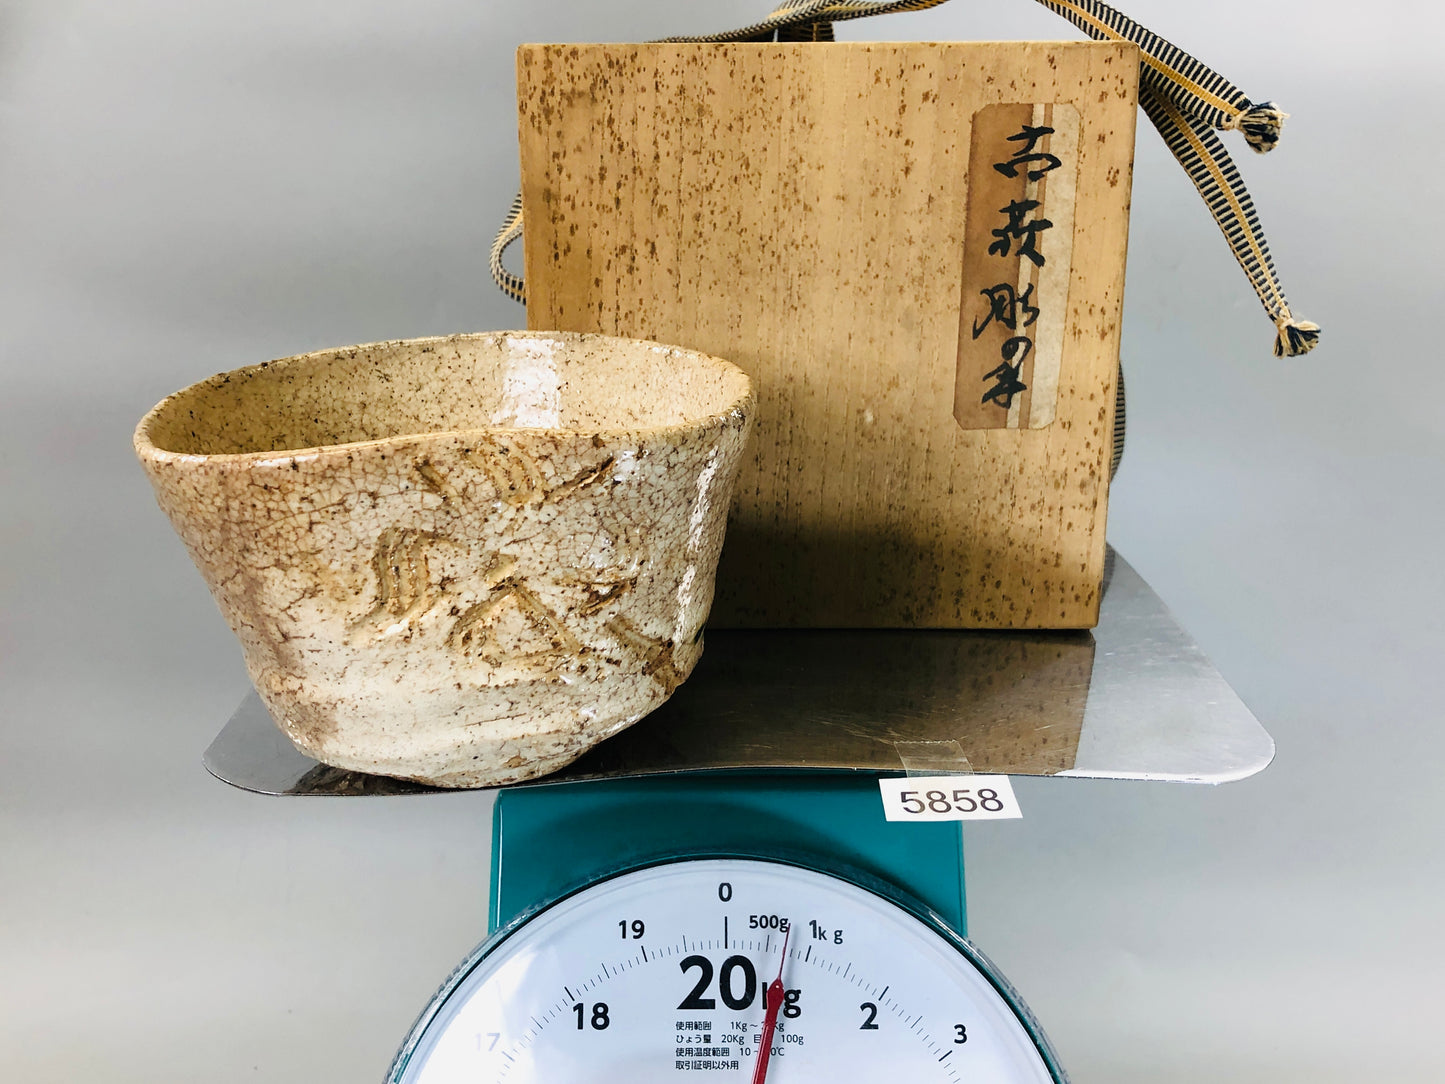 Y5858 CHAWAN Hagi-ware signed box Japan antique tea ceremony pottery vintage